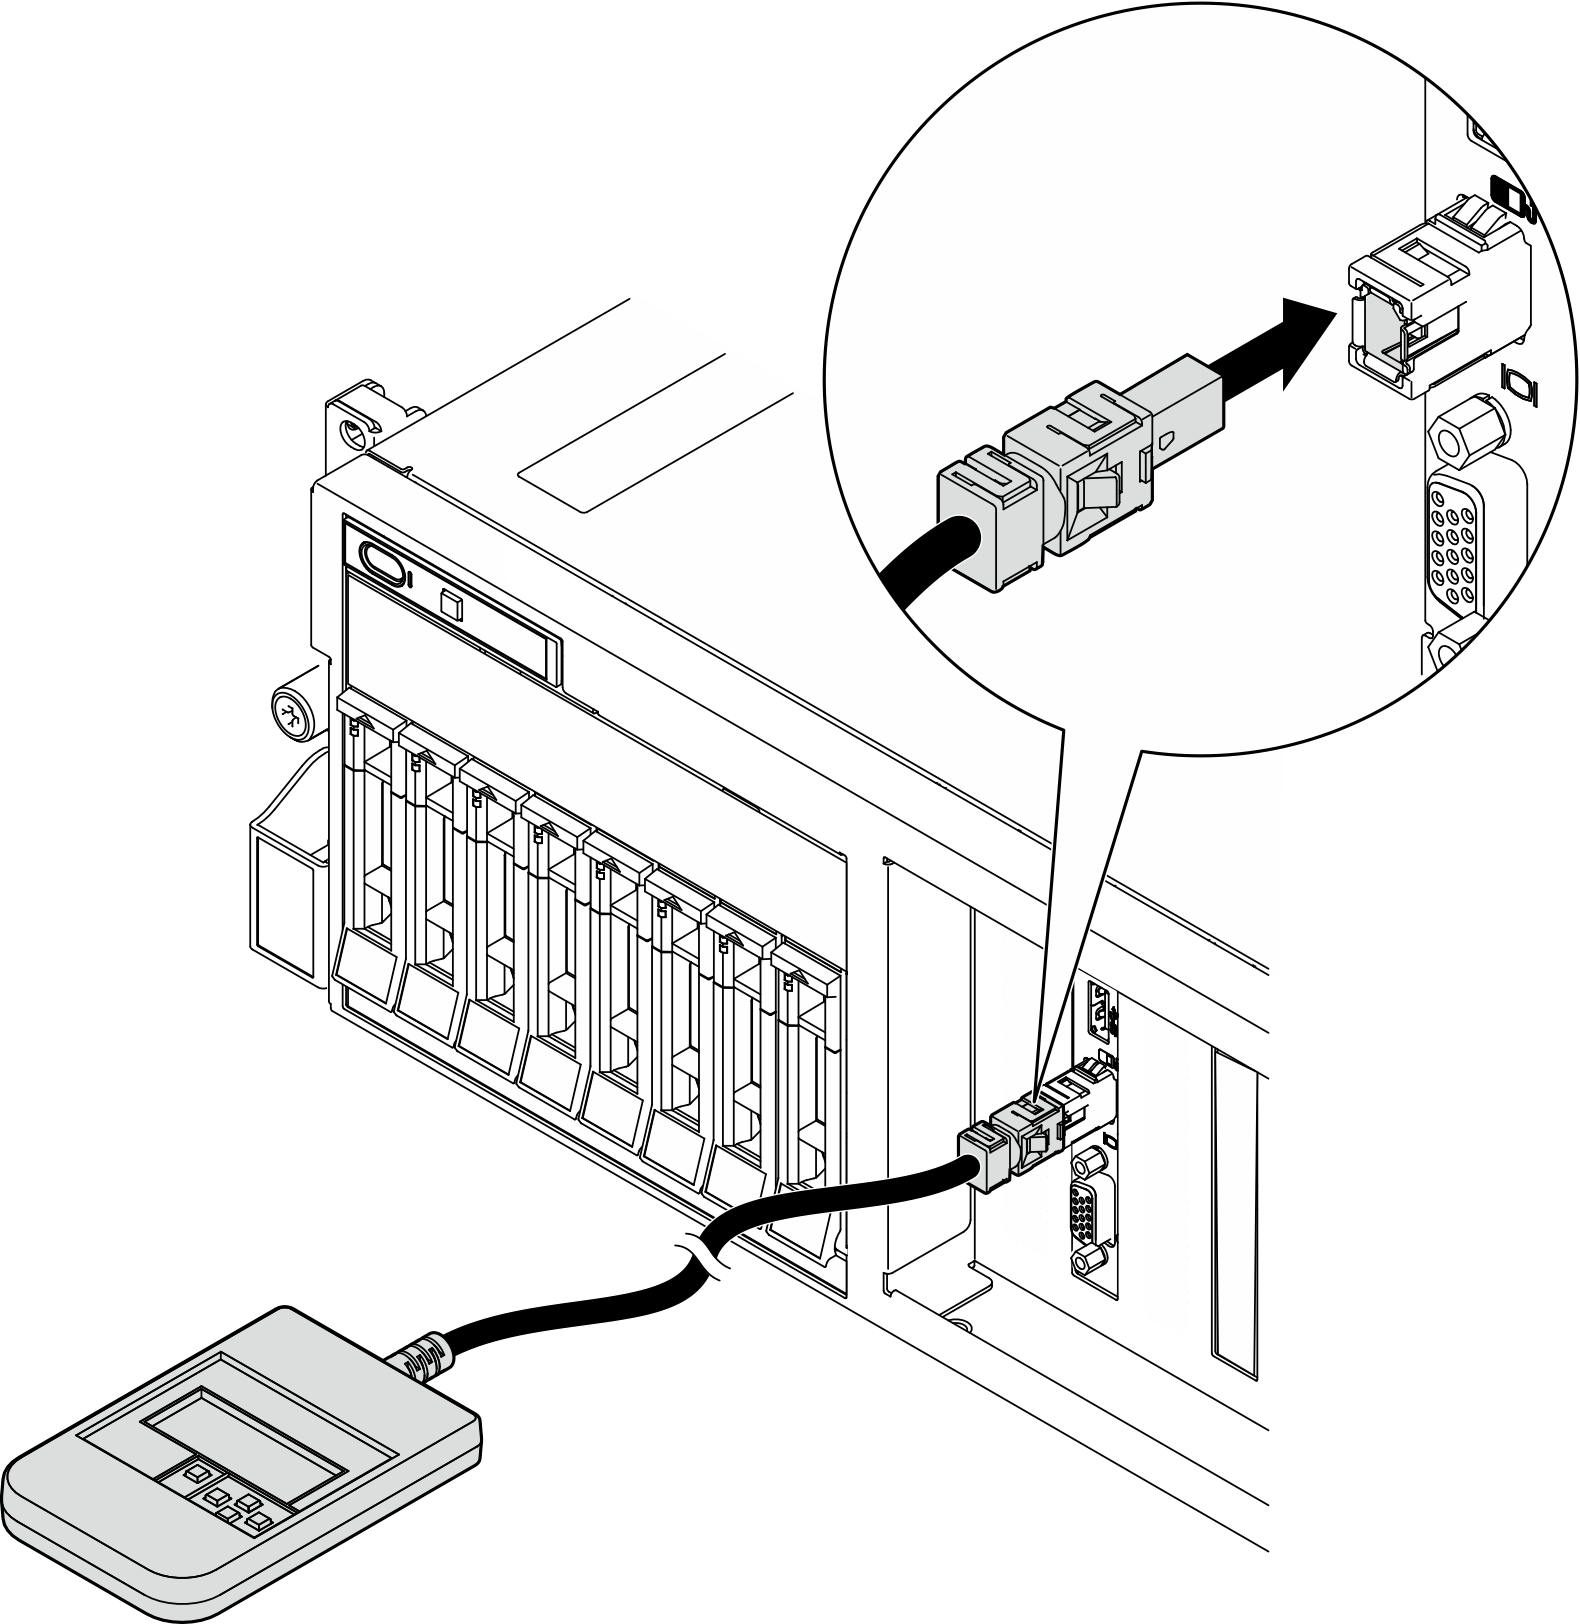 Connecting the external diagnostics handset cable